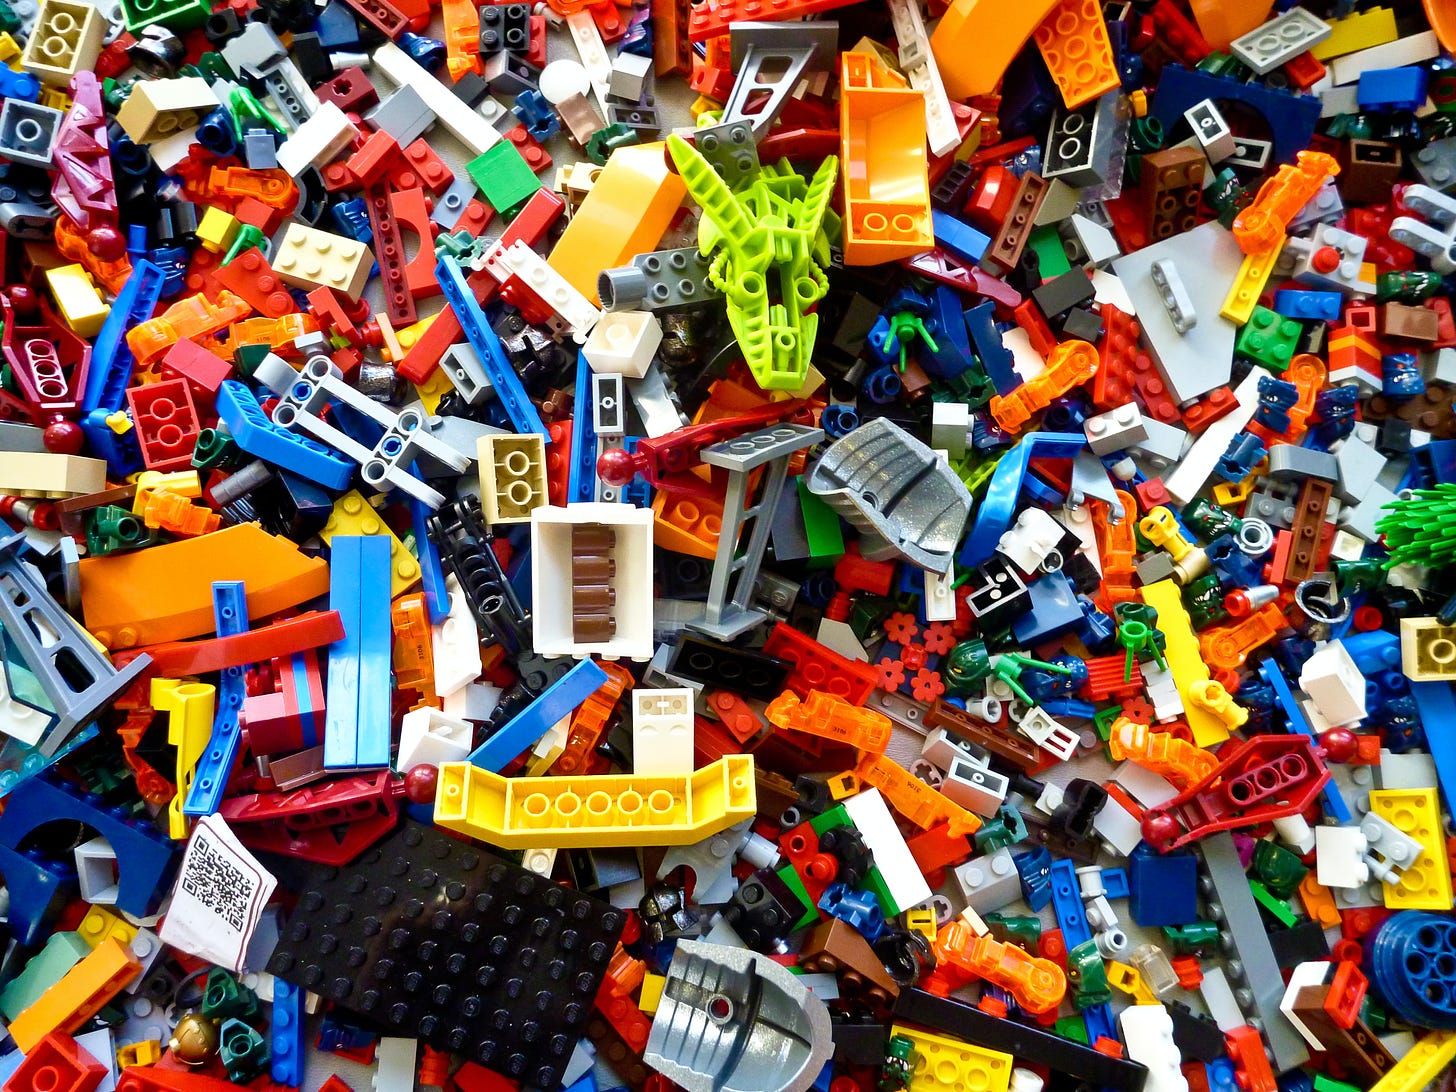 A huge mess of legos